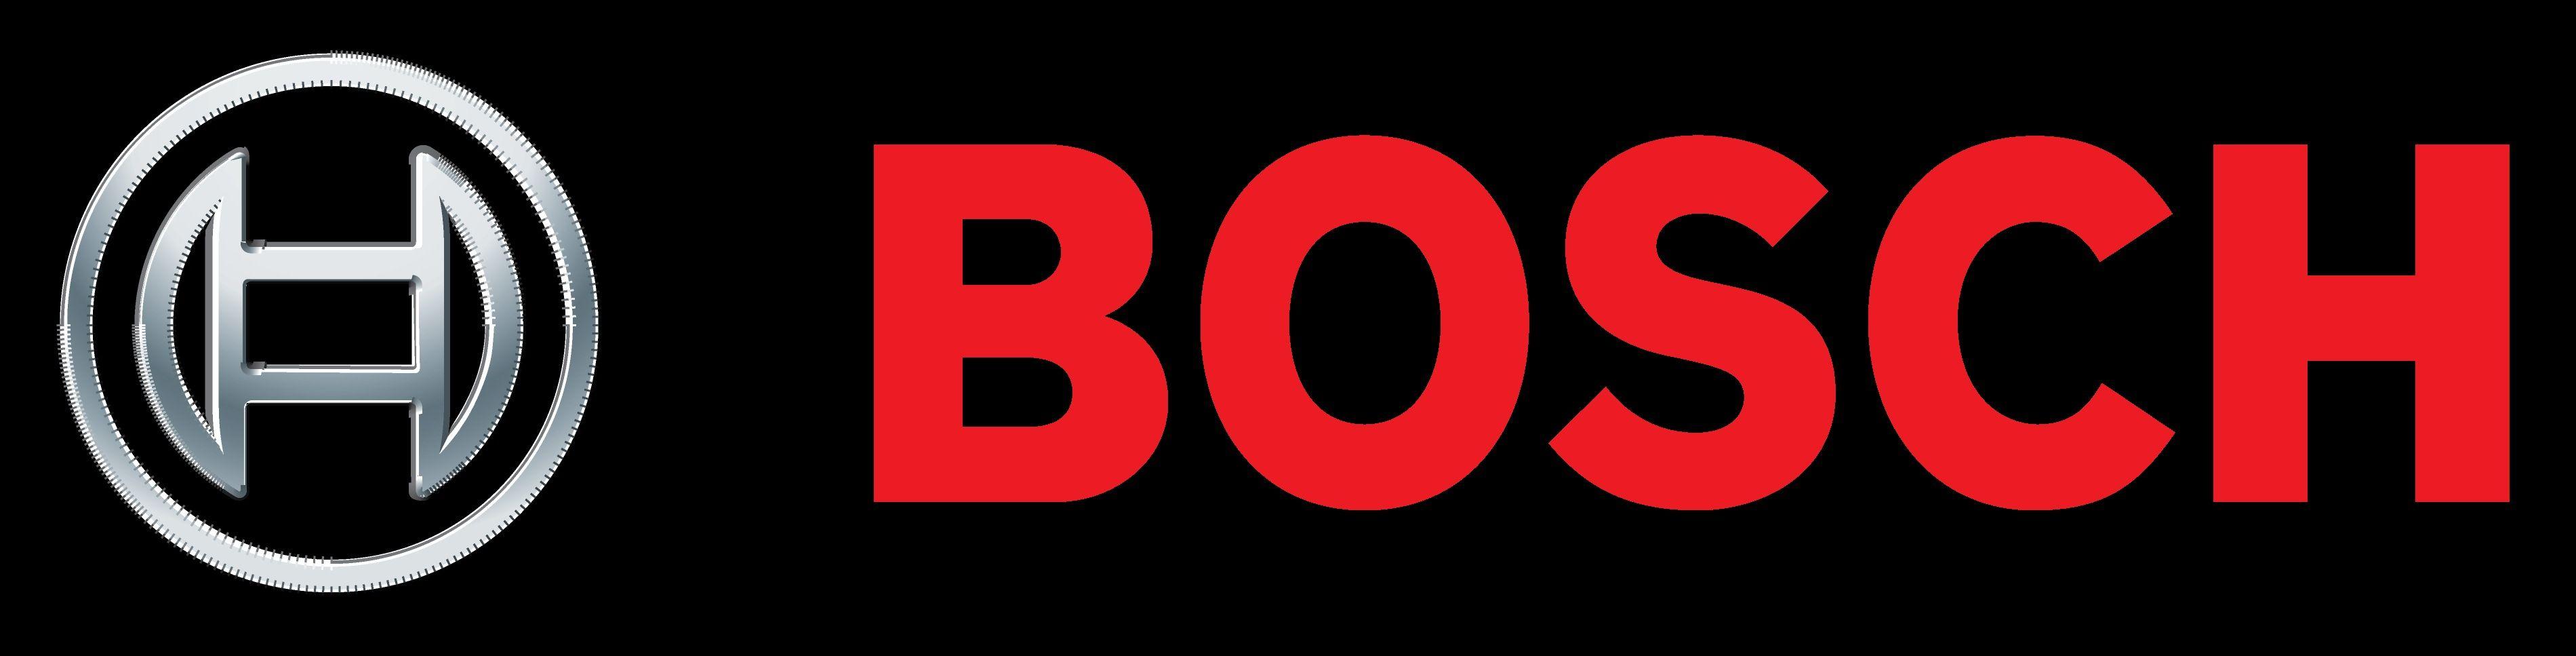 Bosch symbol -Logo Brands For Free HD 3D